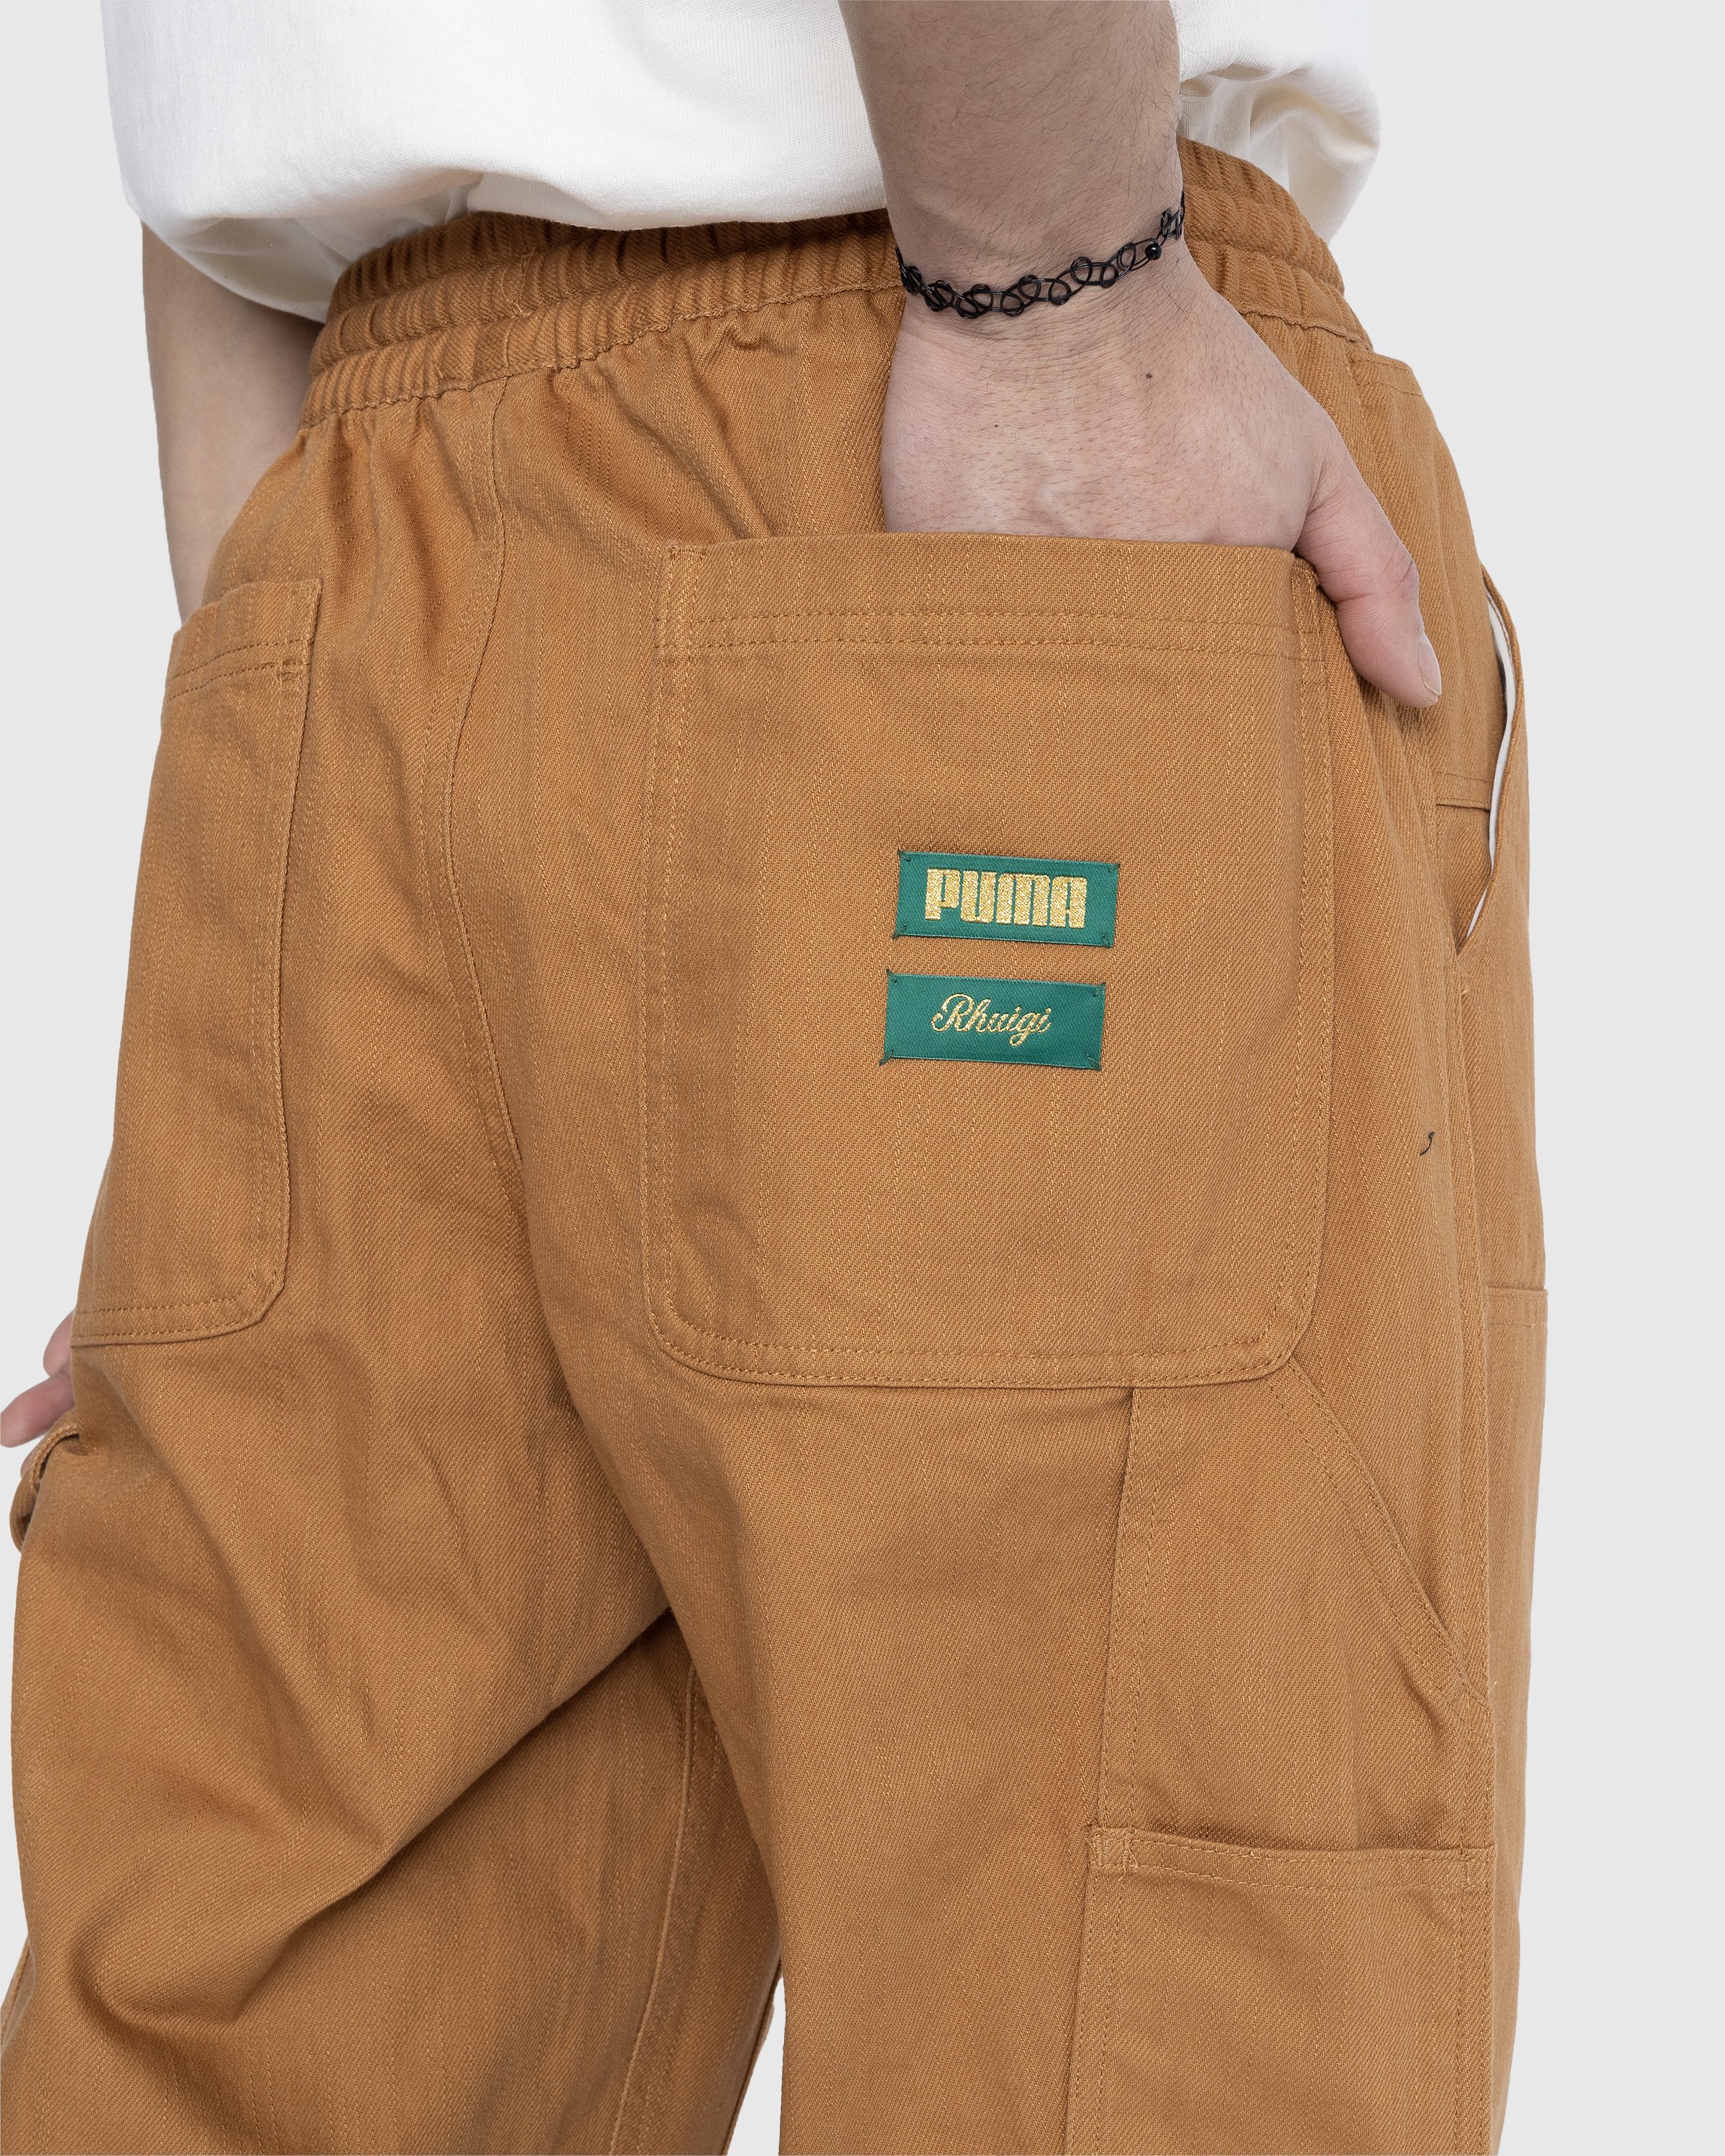 Puma x Rhuigi - Double Knee Pants Desert Tan - Clothing - Brown - Image 6